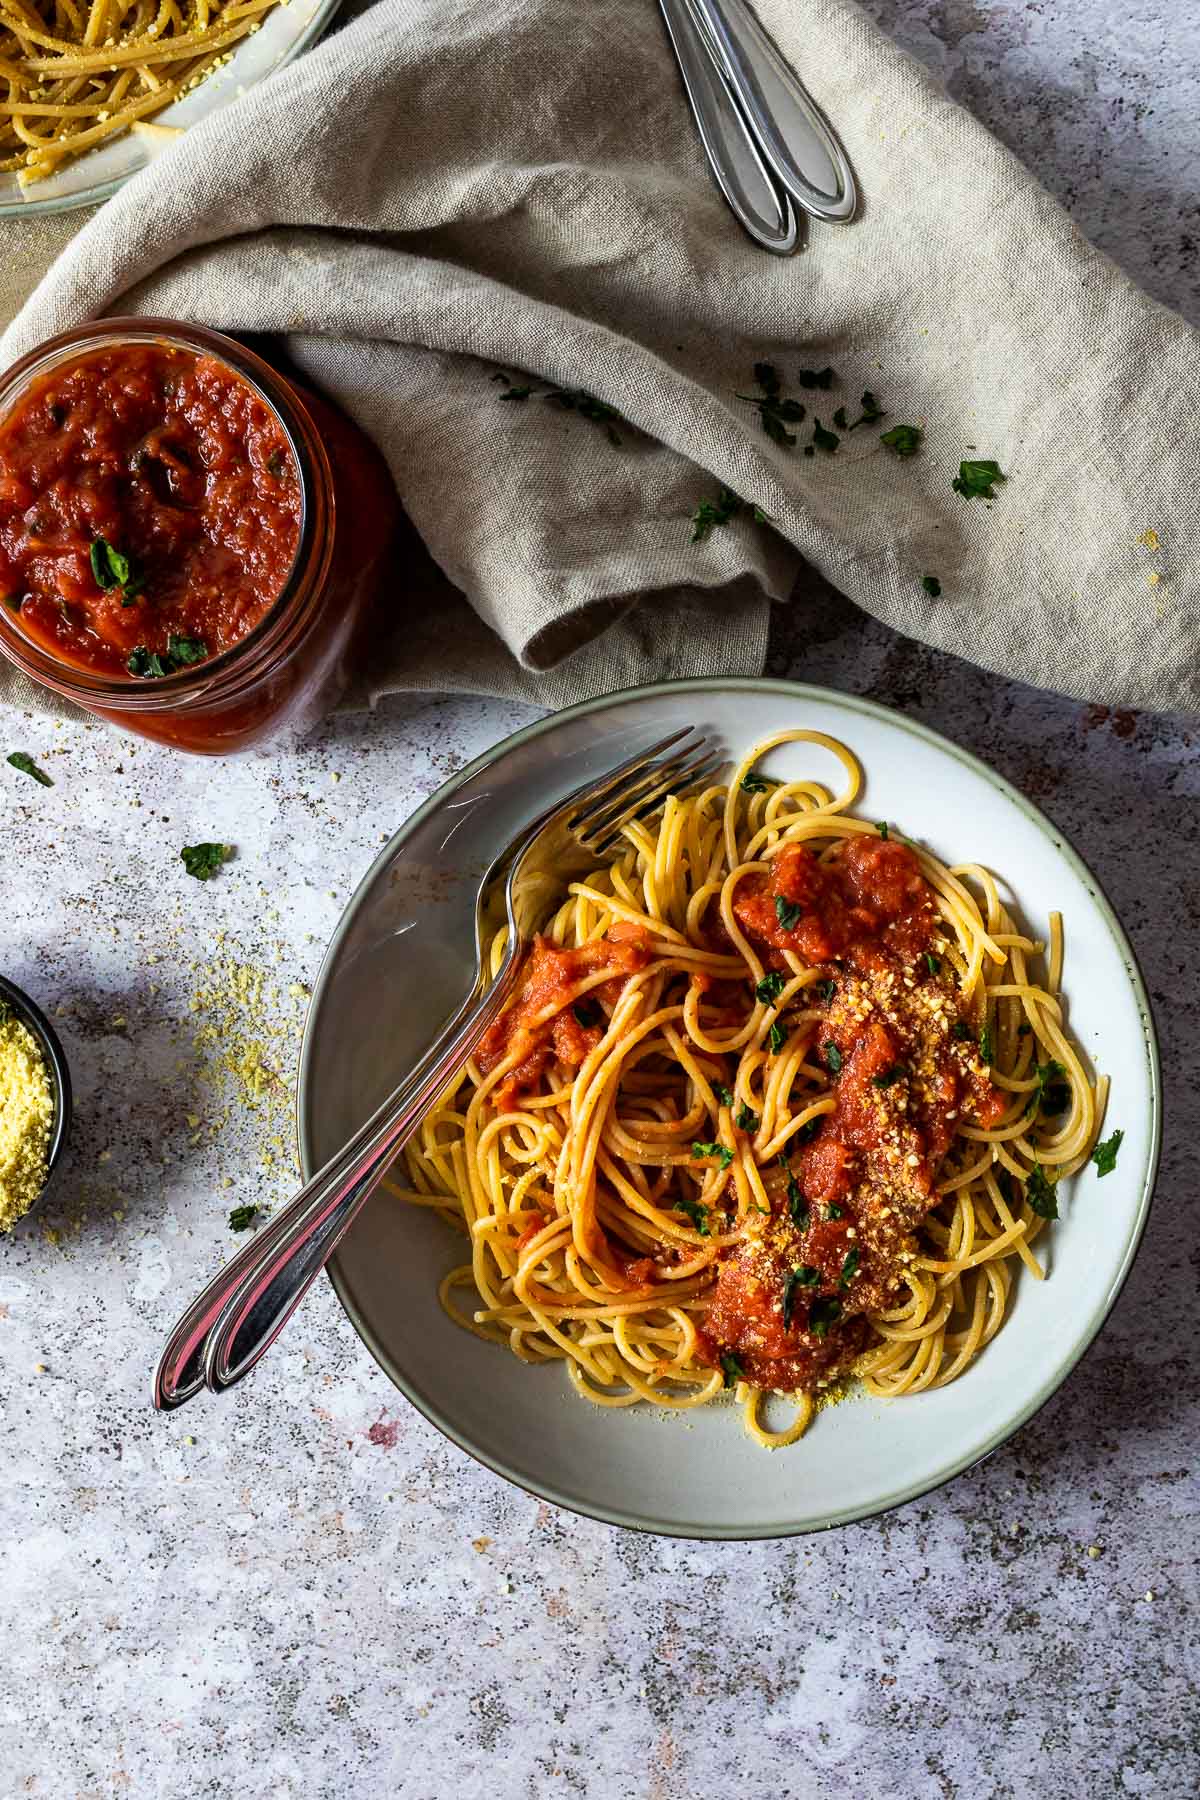 Spaghetti with marinara sauce in a bowl with a marinara jar next to it.